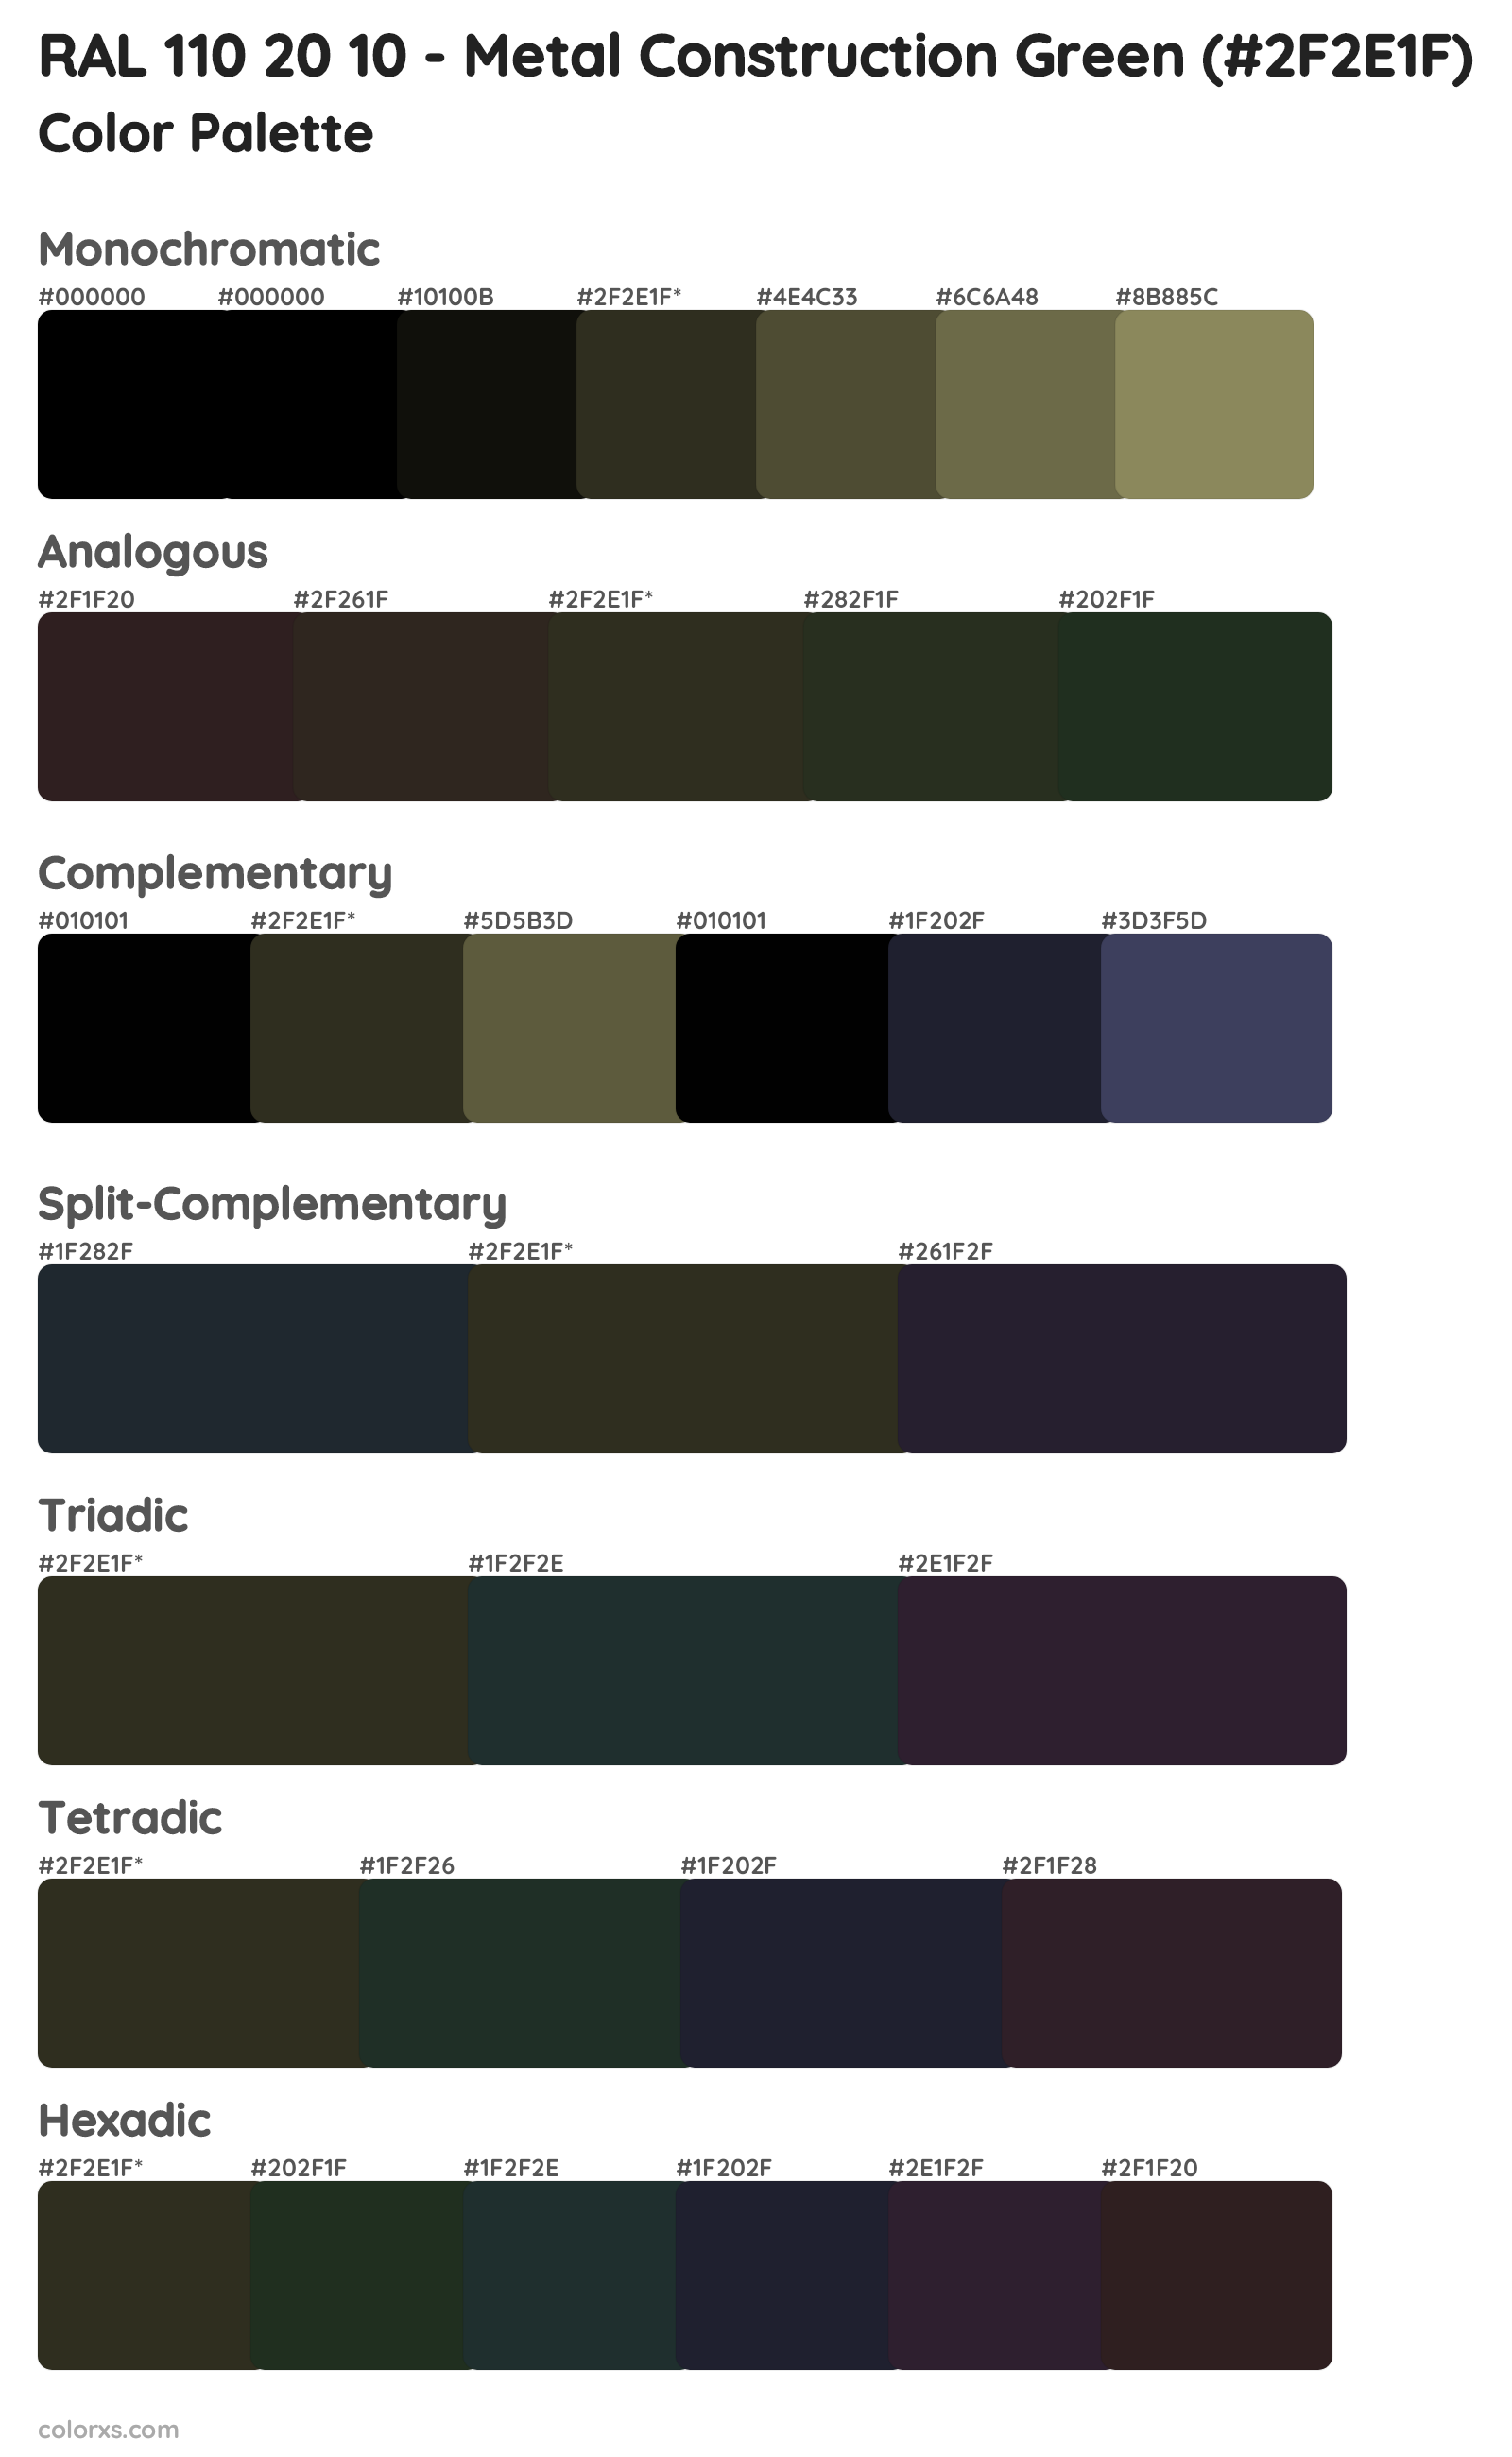 RAL 110 20 10 - Metal Construction Green Color Scheme Palettes